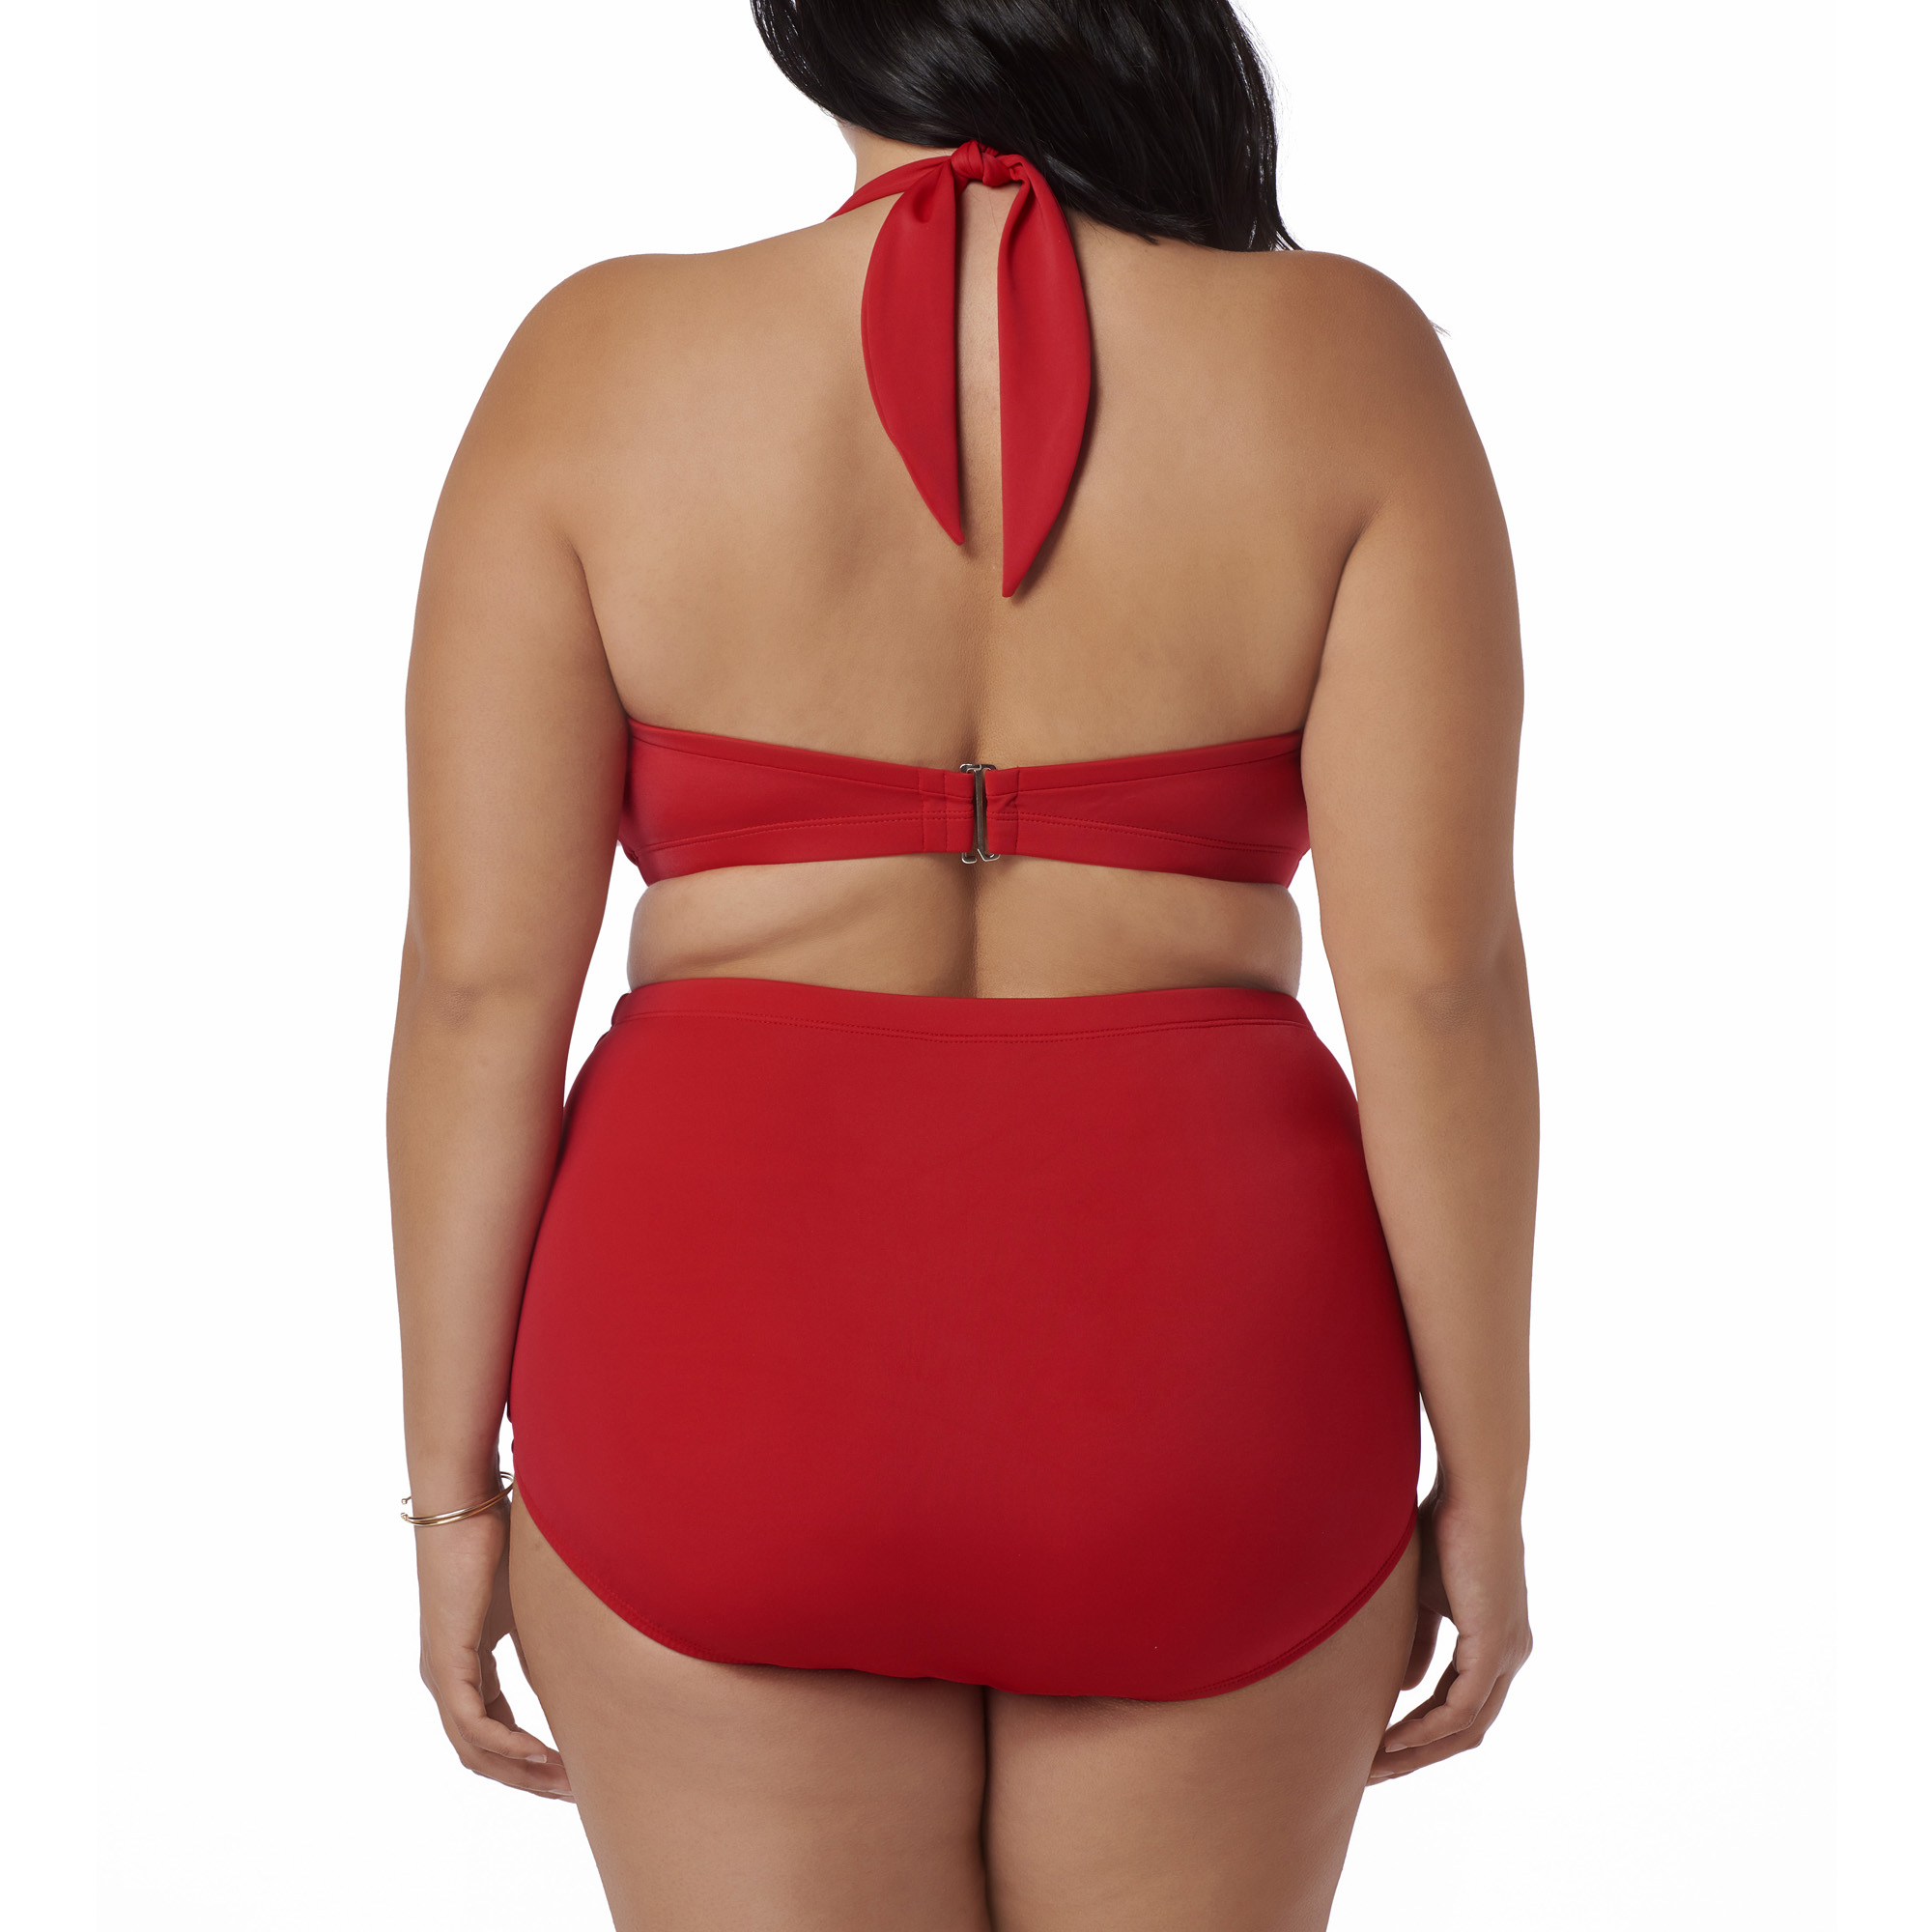 Catalina Women's plus-size slimming high-waisted bikini two-piece swimsuit set - image 2 of 2